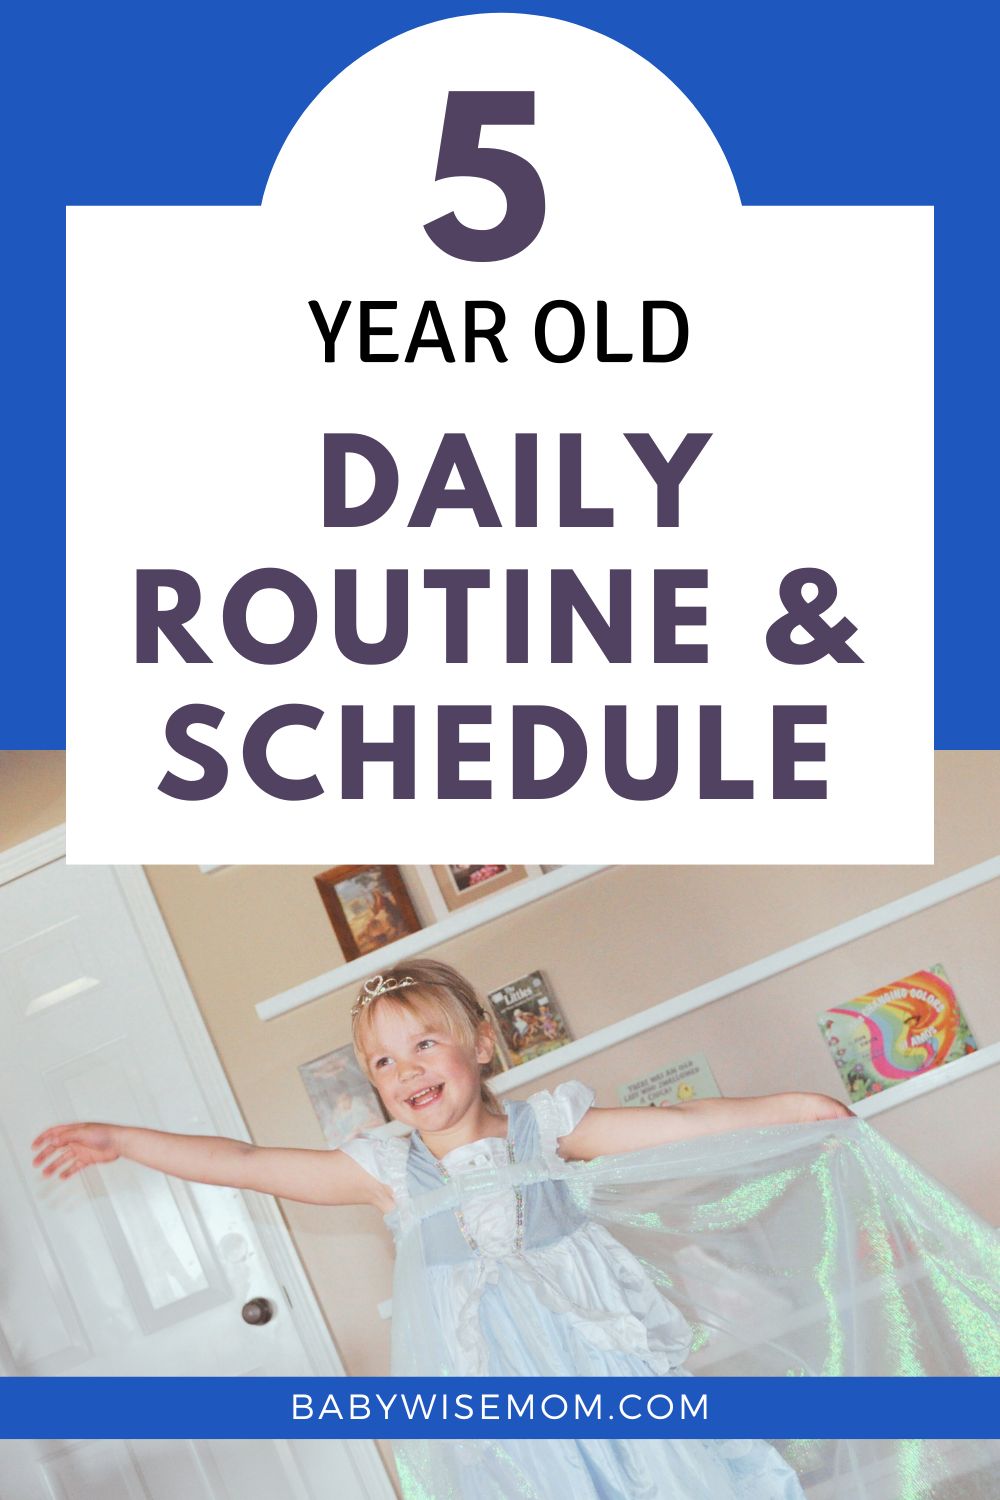 5 year old daily schedule pinnabie image